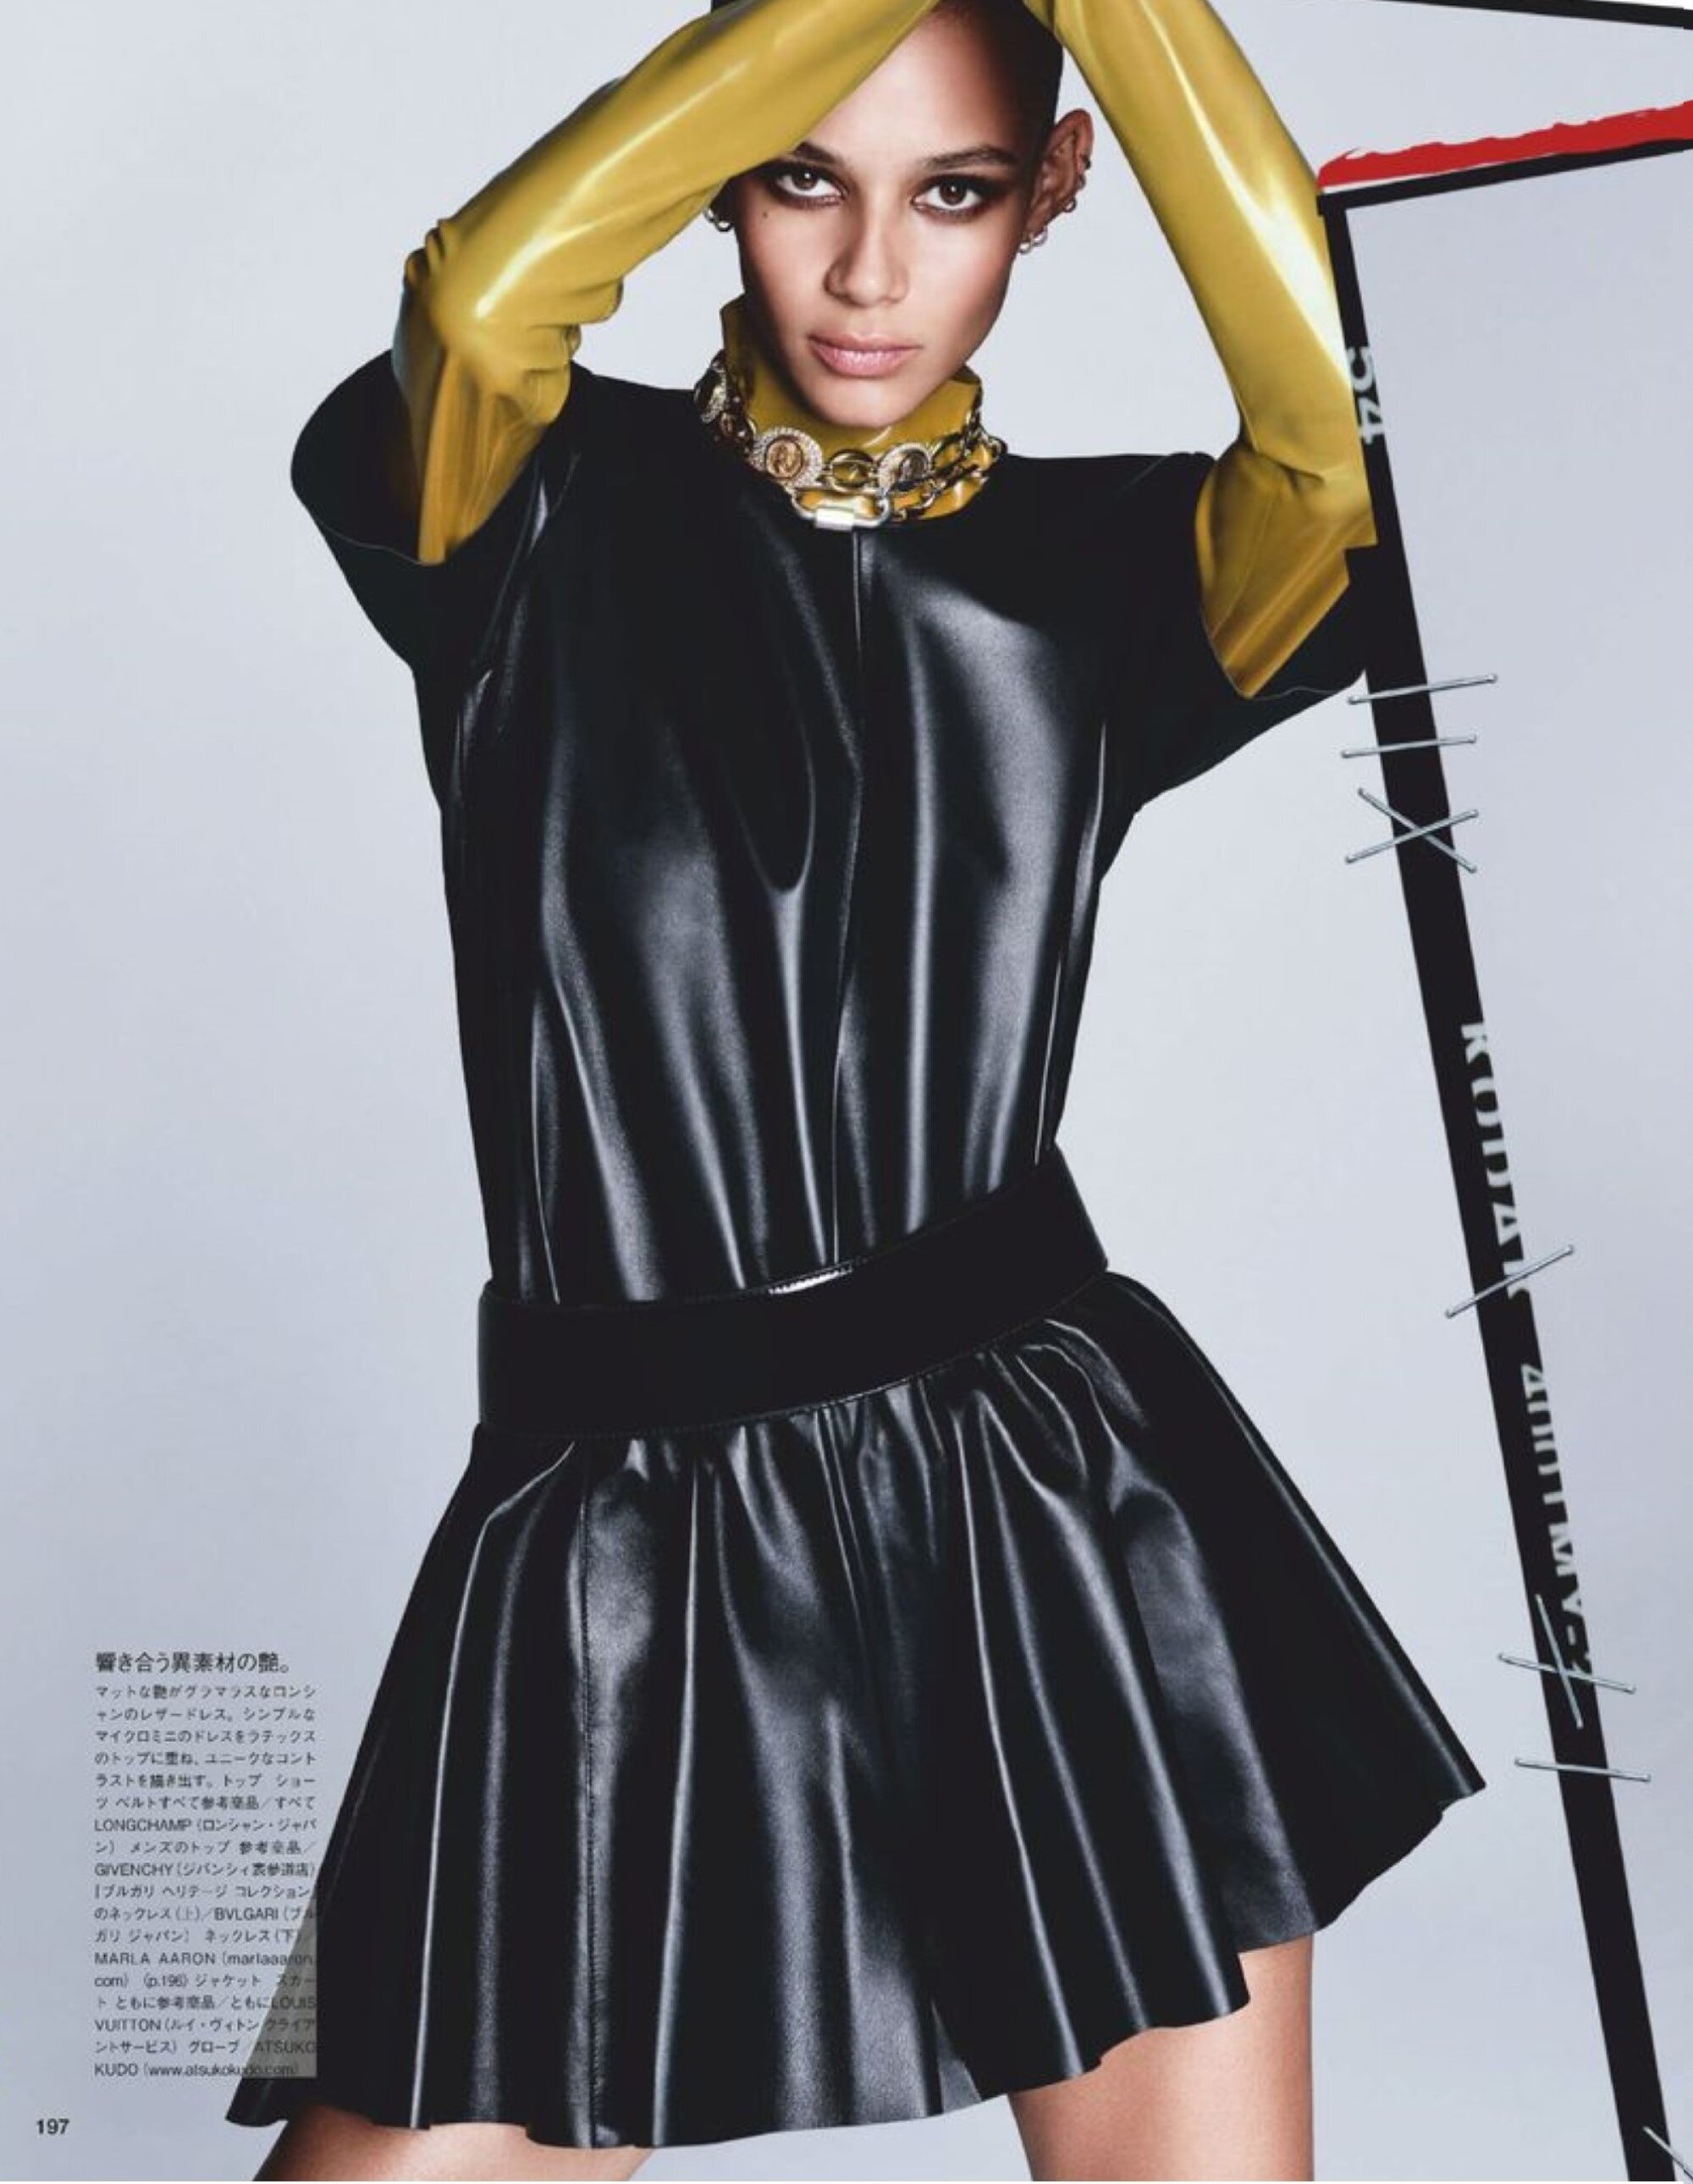 Luigi Iango Vogue Japan Oct 2020 (5) S.jpg